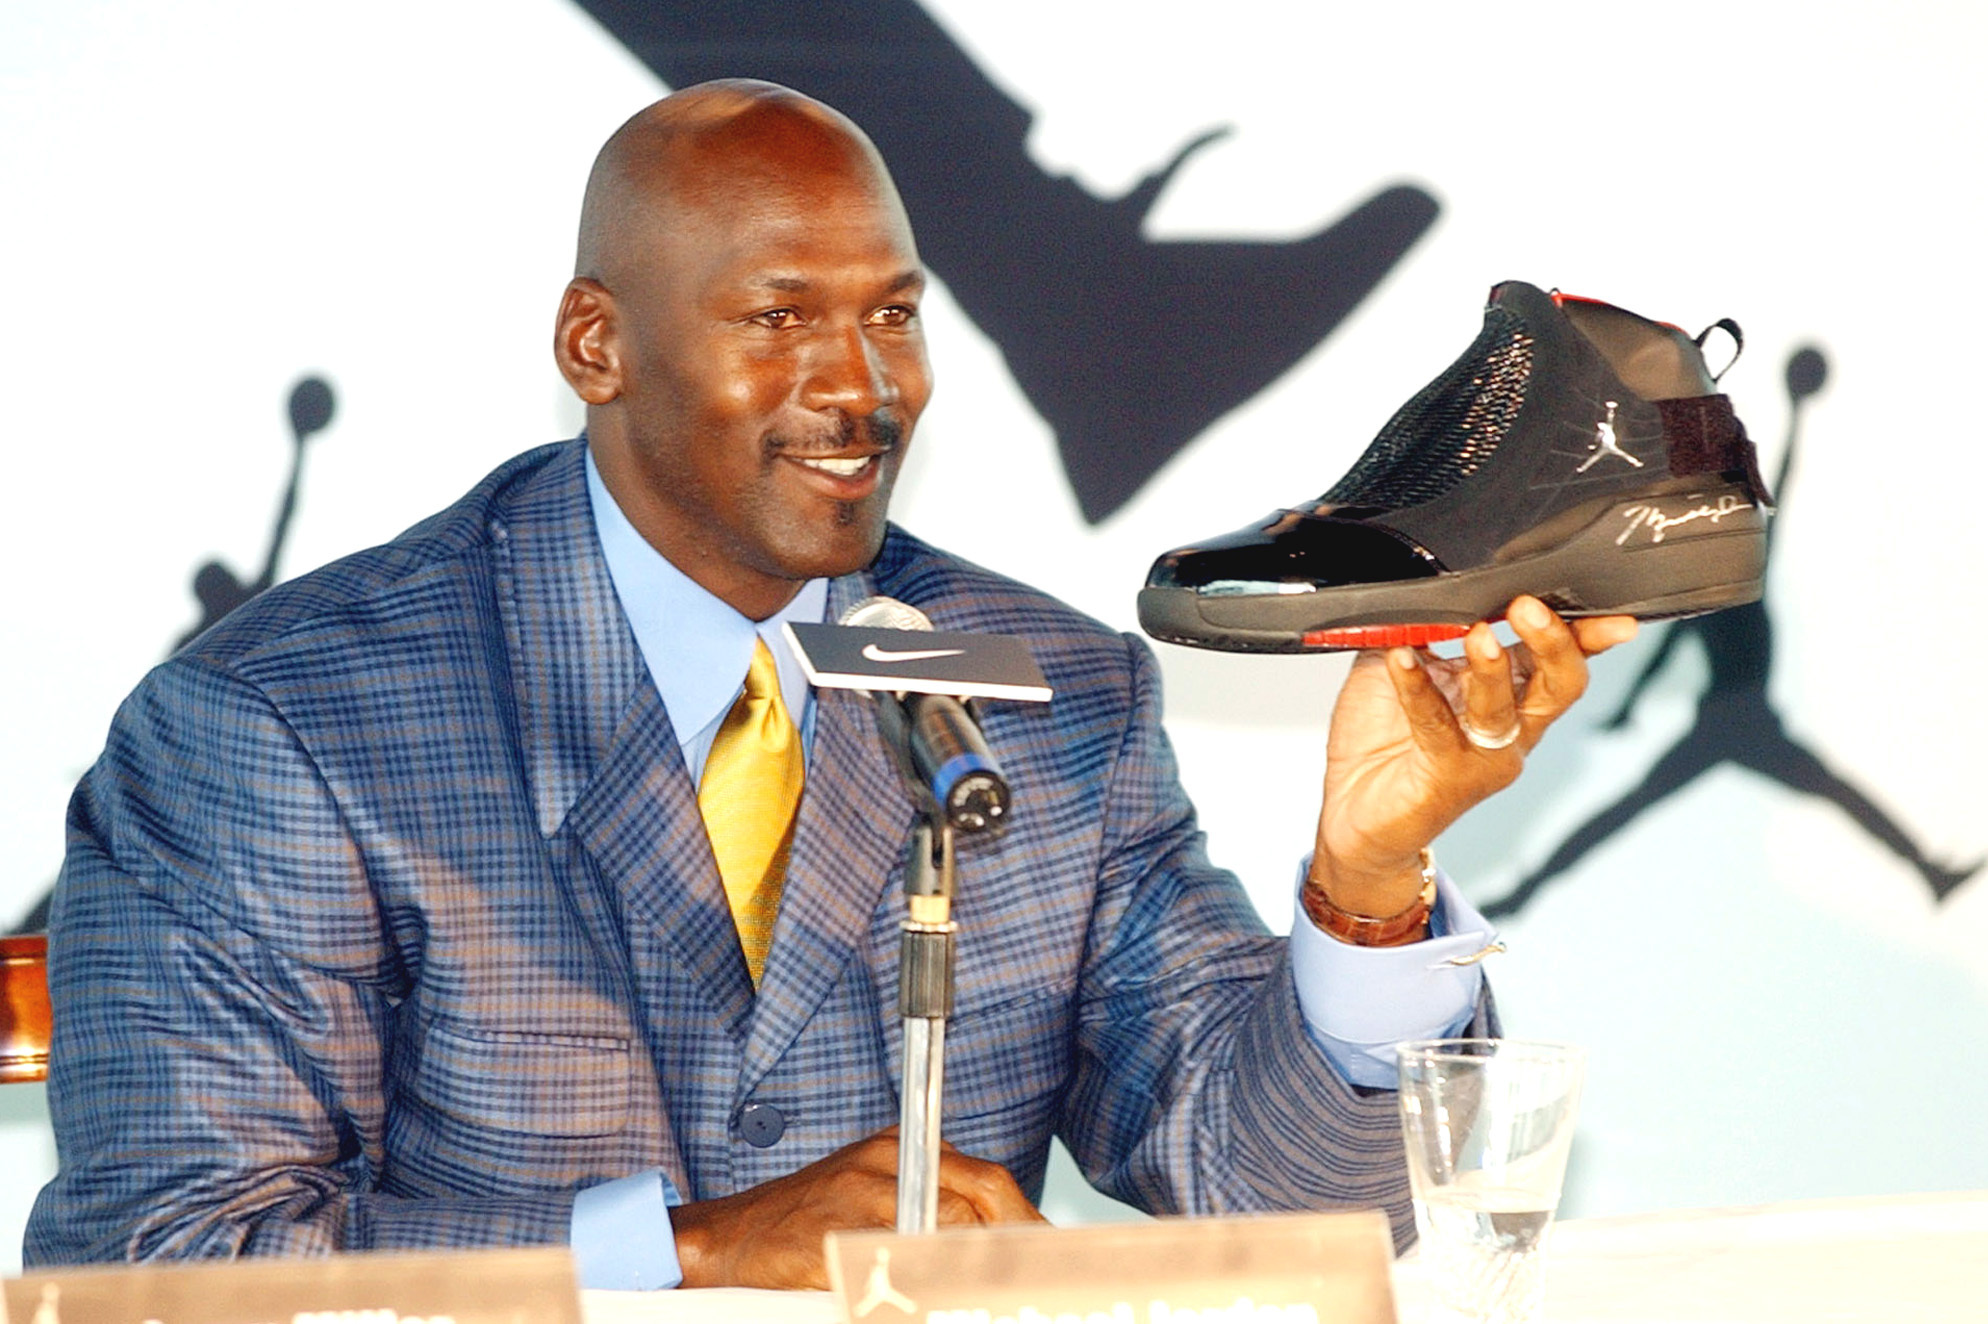 Top 5 active NBA players under Michael Jordan's shoe brand Air Jordan